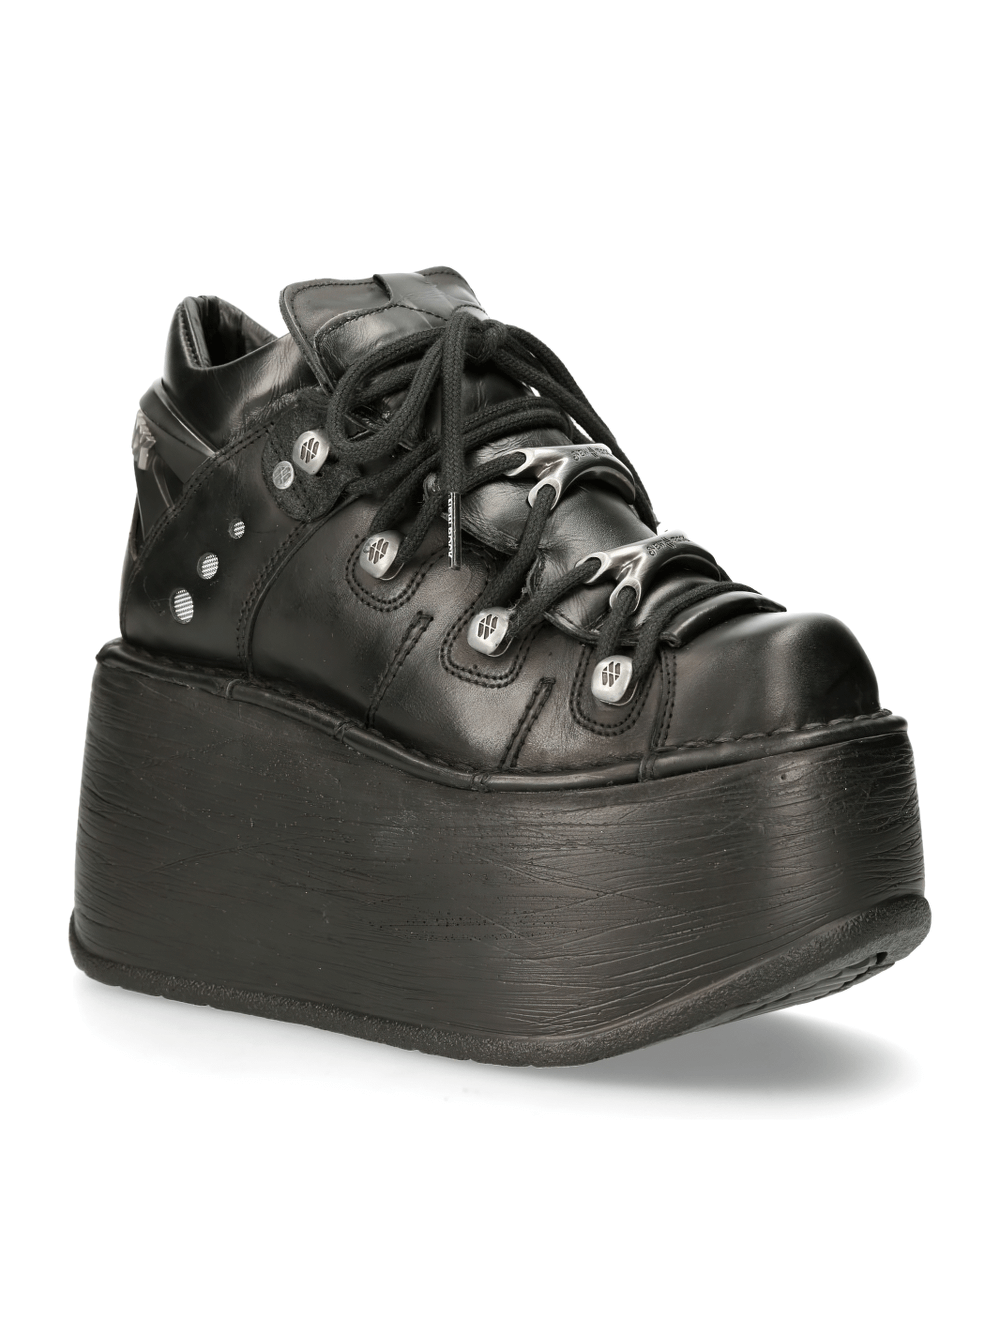 NEW ROCK Black Leather Punk Platform Ankle Boots